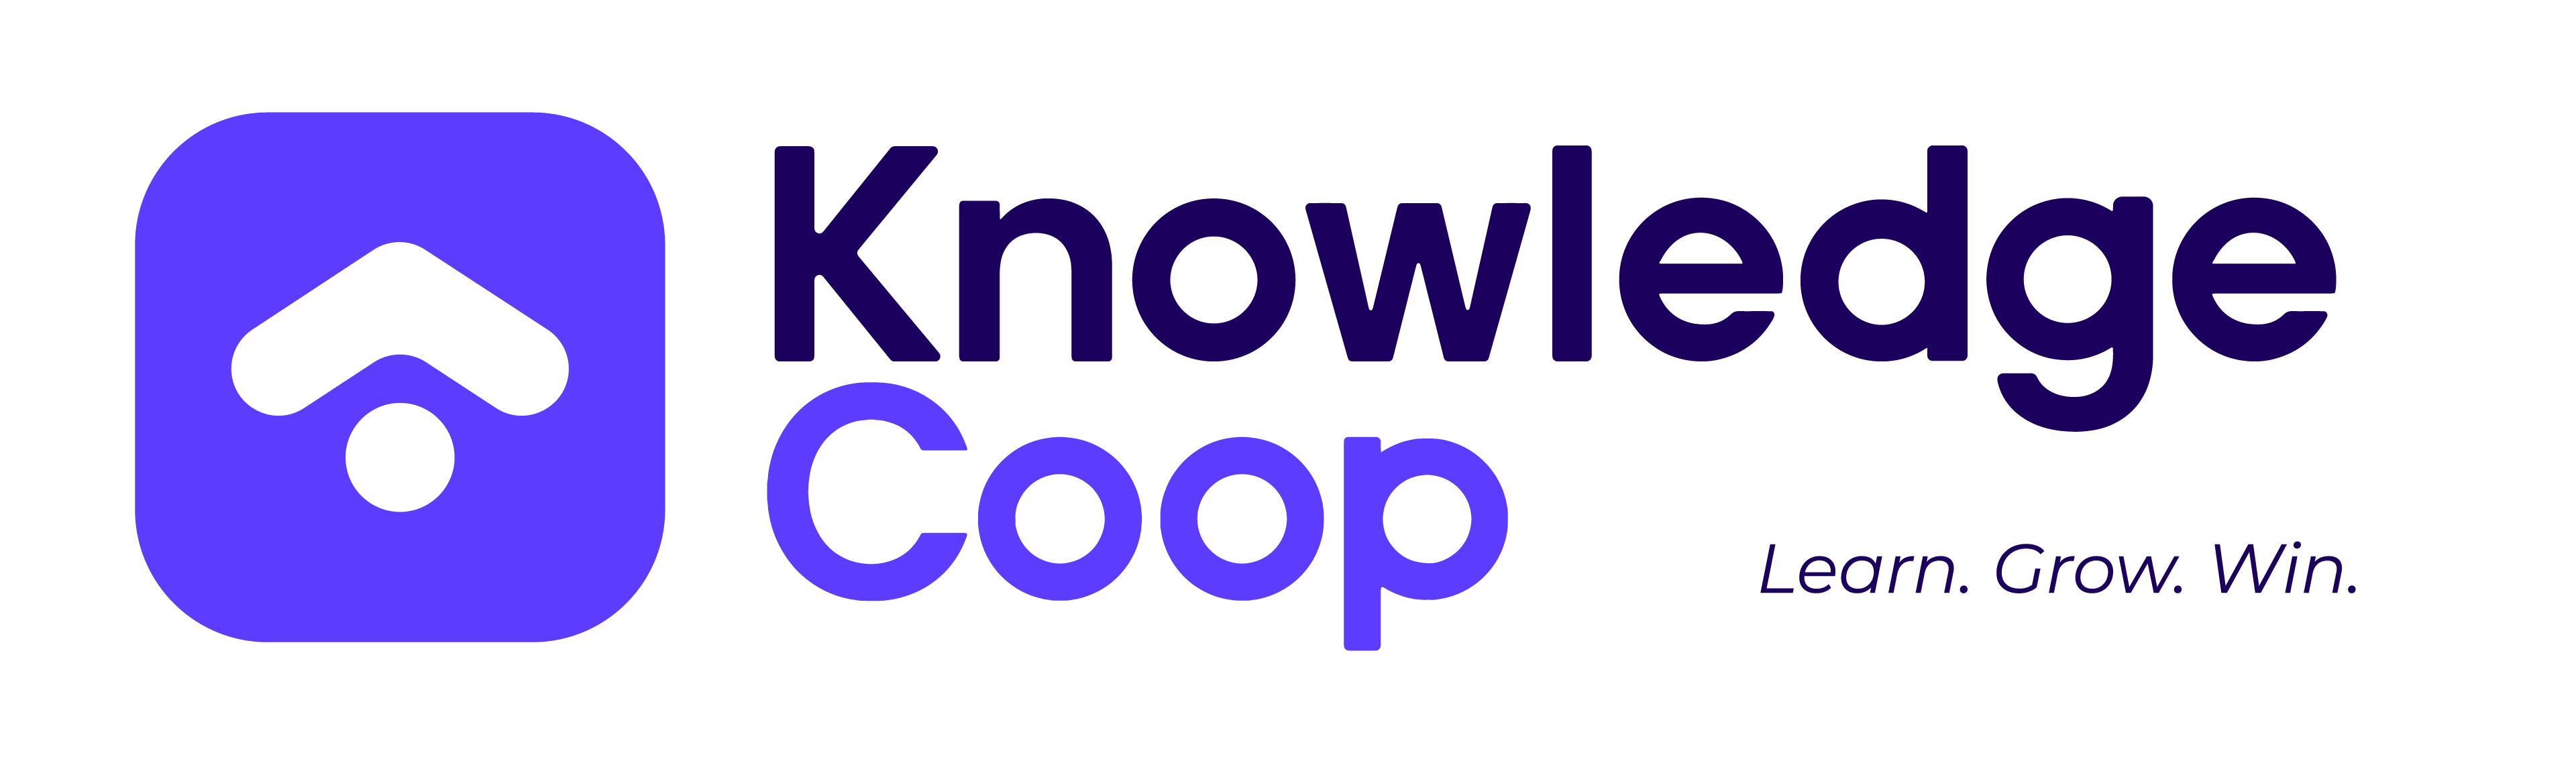 KC_logo_2021